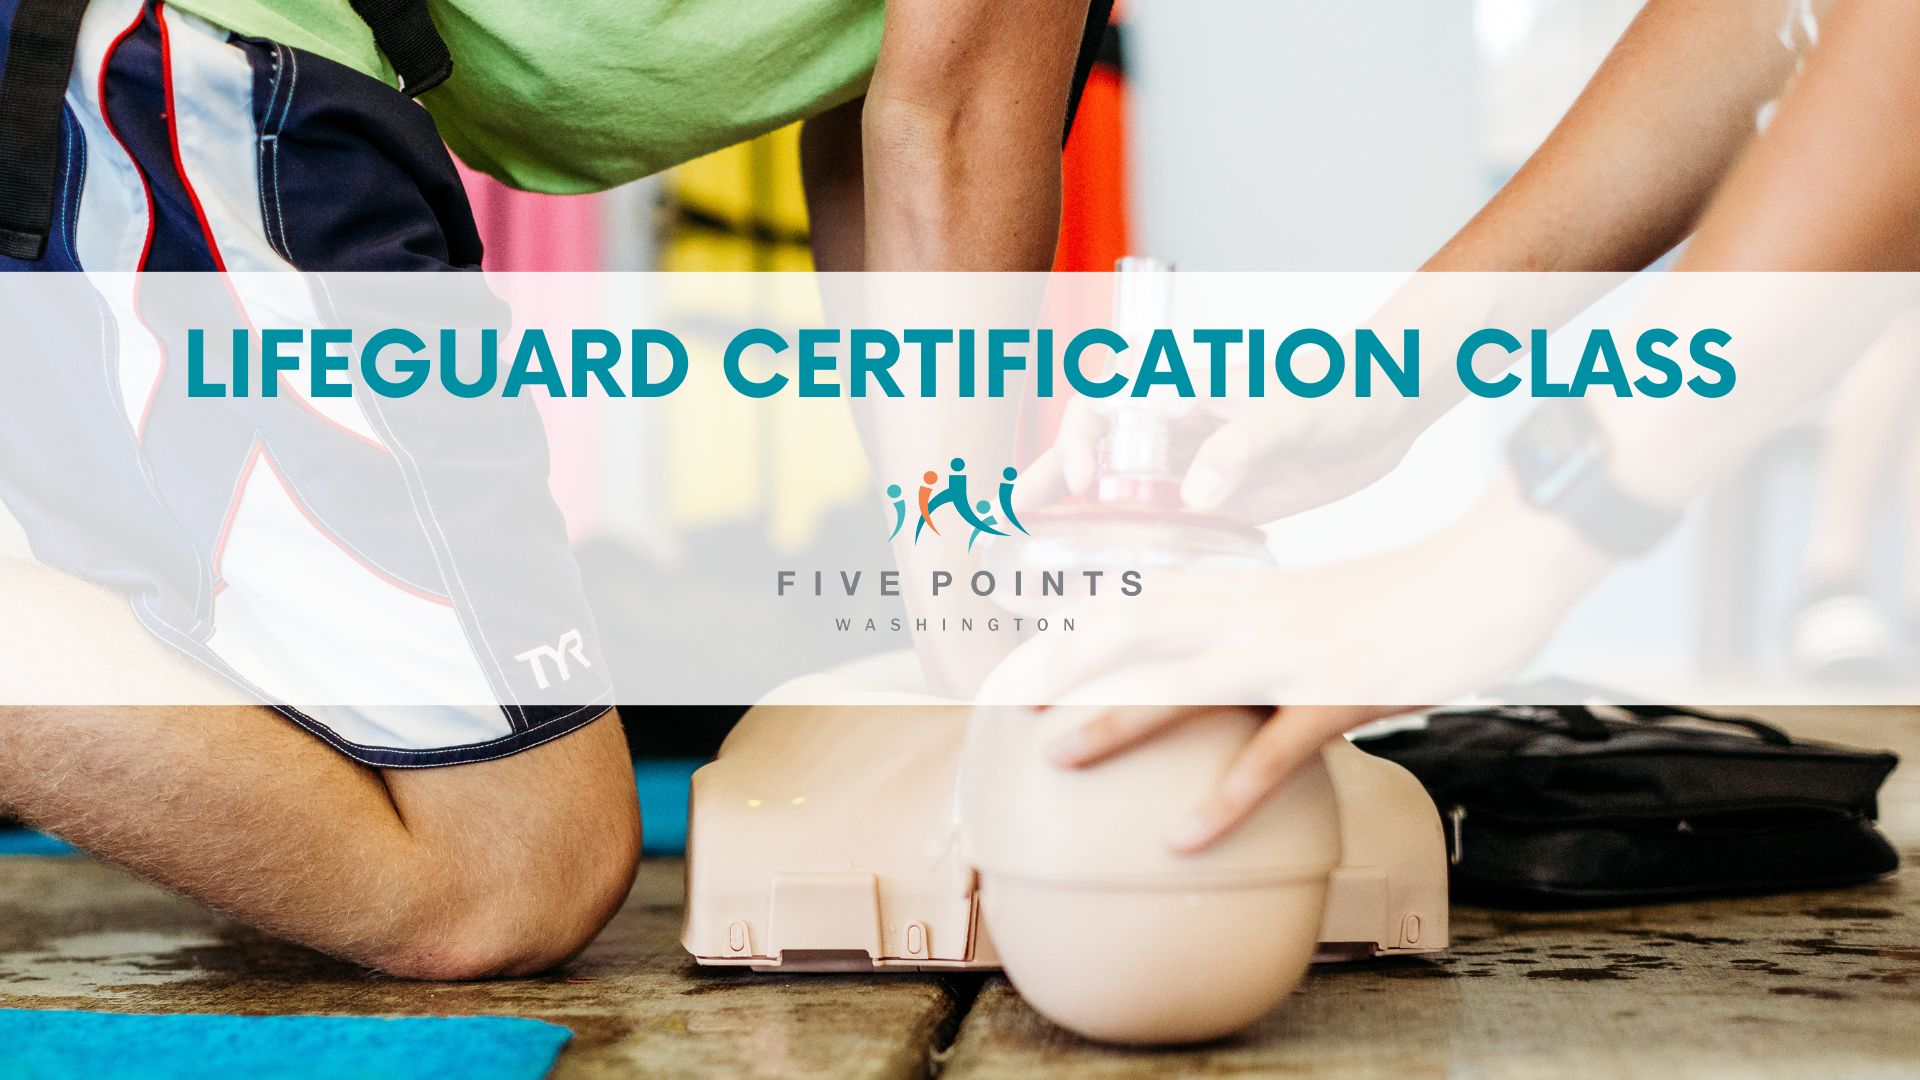 Life guard certification class tutorials